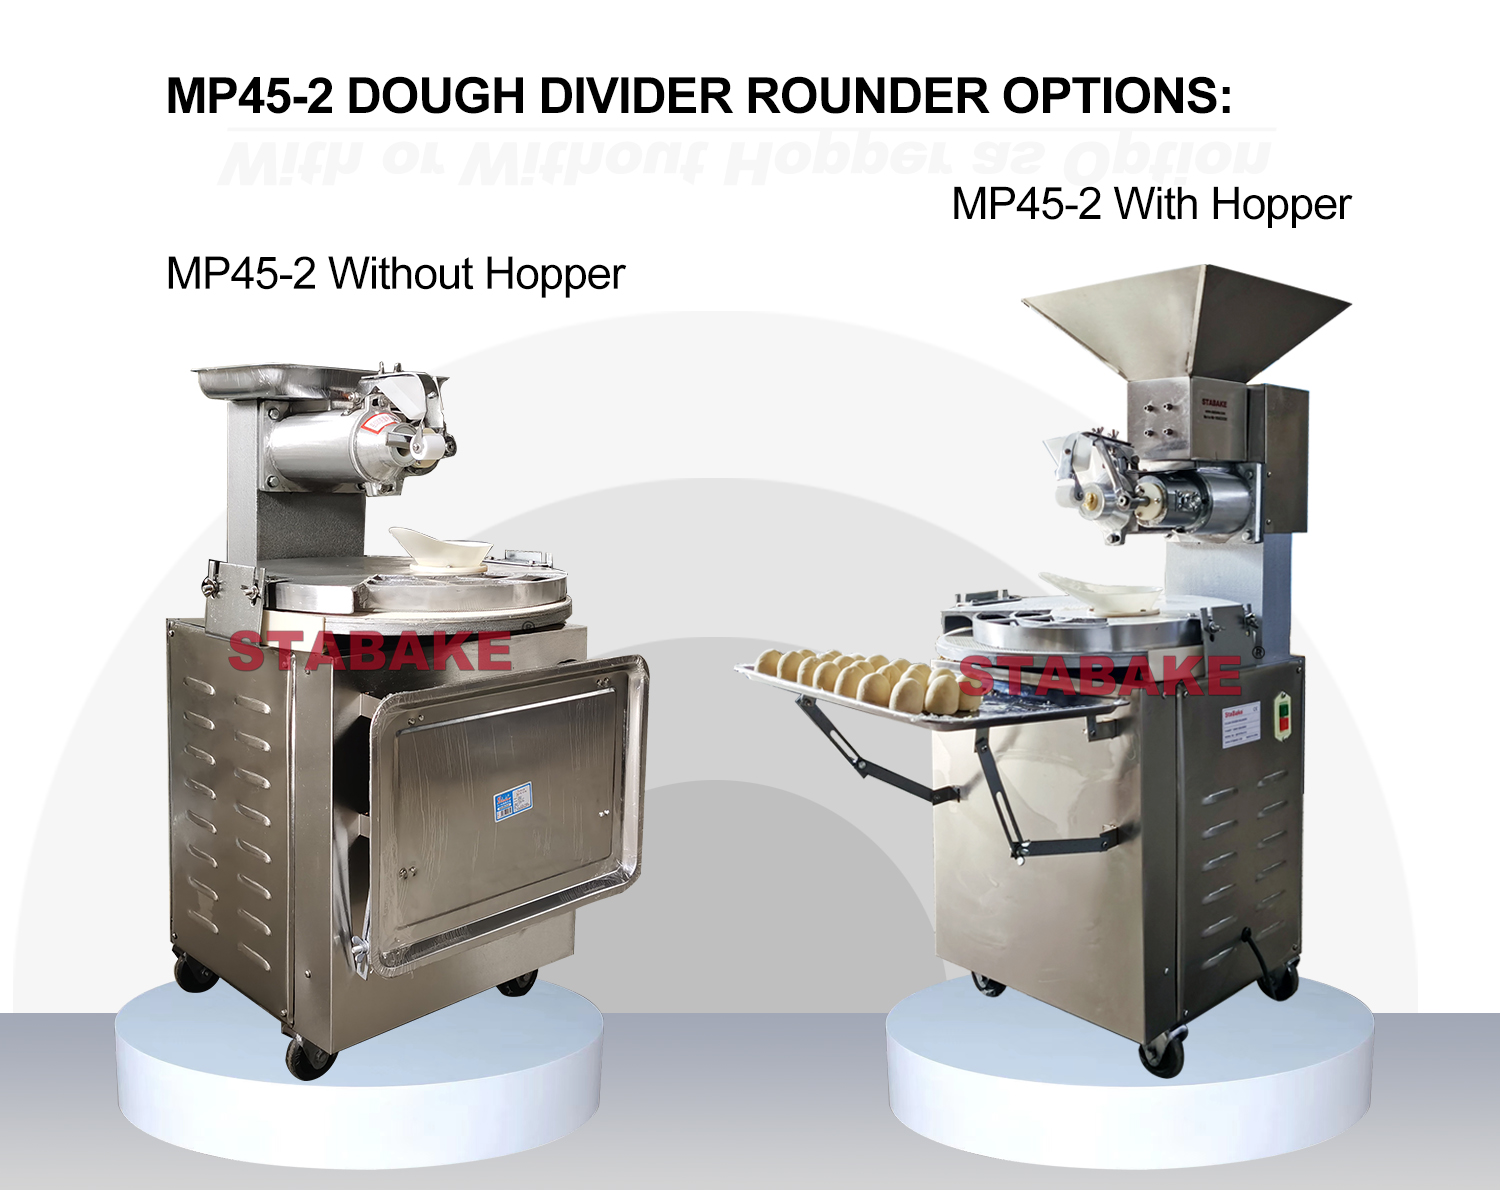 MP45-2 dough divider rounder